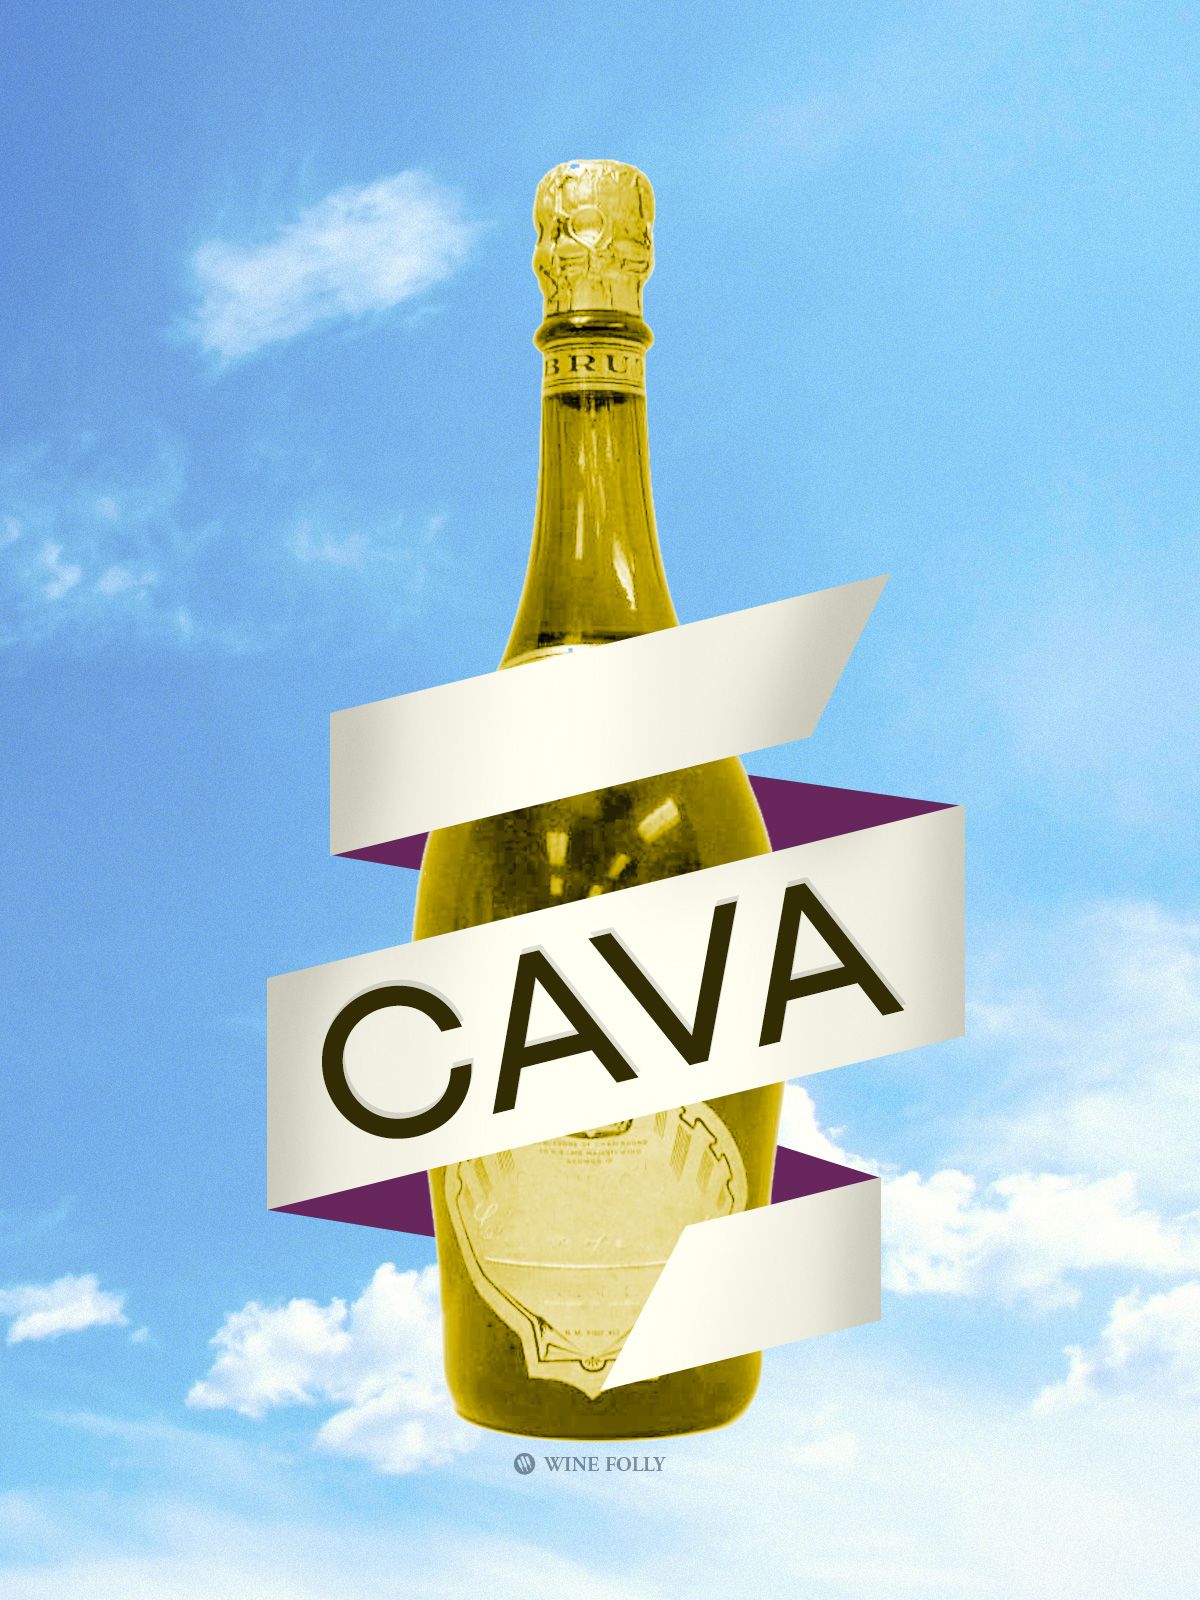 Brut Cava Illustrasjon av Wine Folly